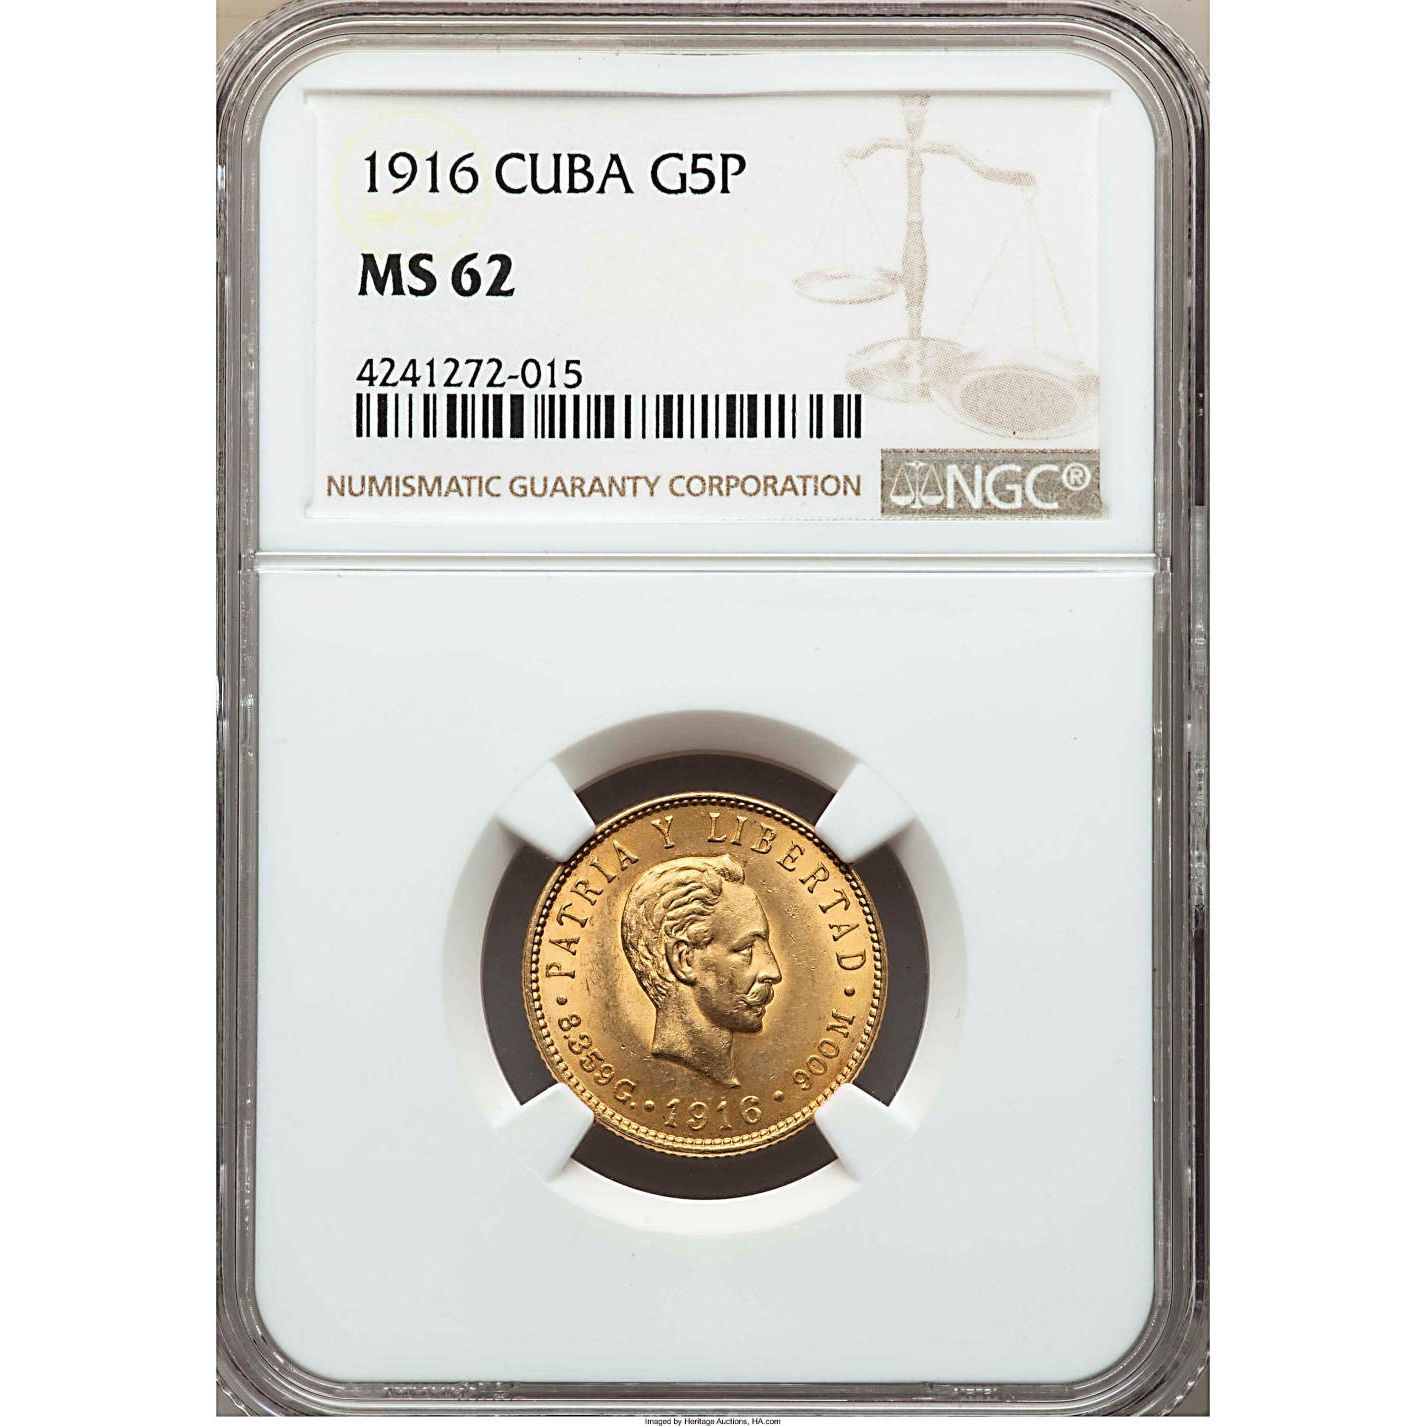 1916 5 Pesos Cuba Gold Coin MS62 KM# 19